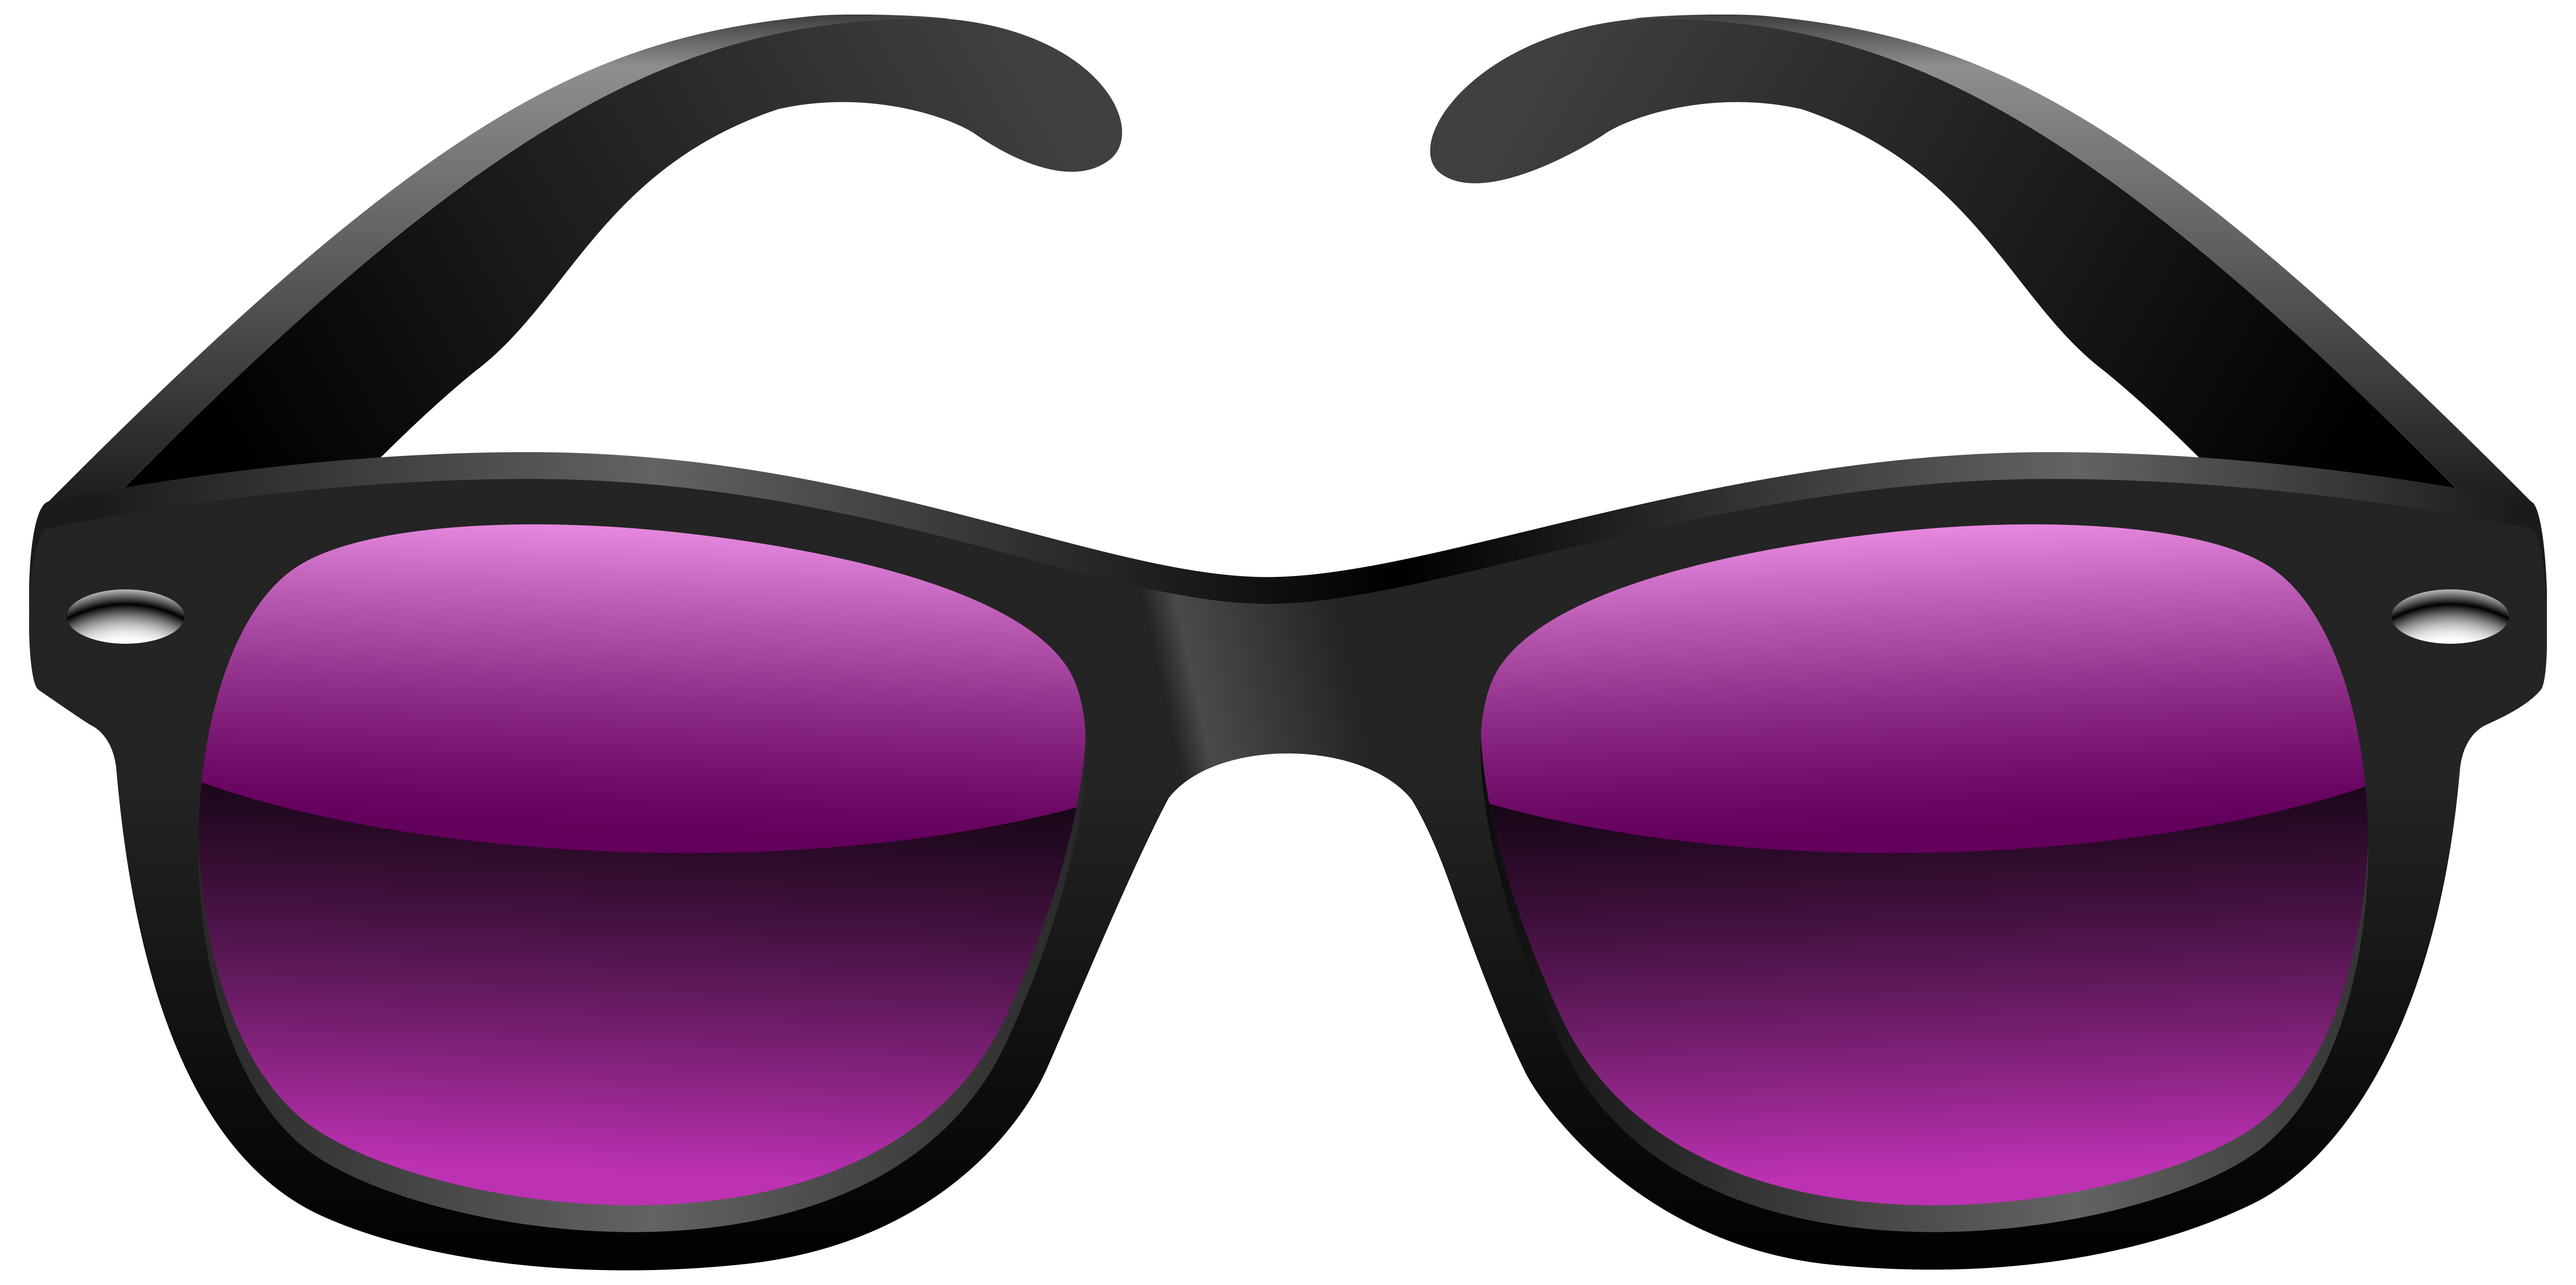 Black and purple sunglasses. Goggles clipart military